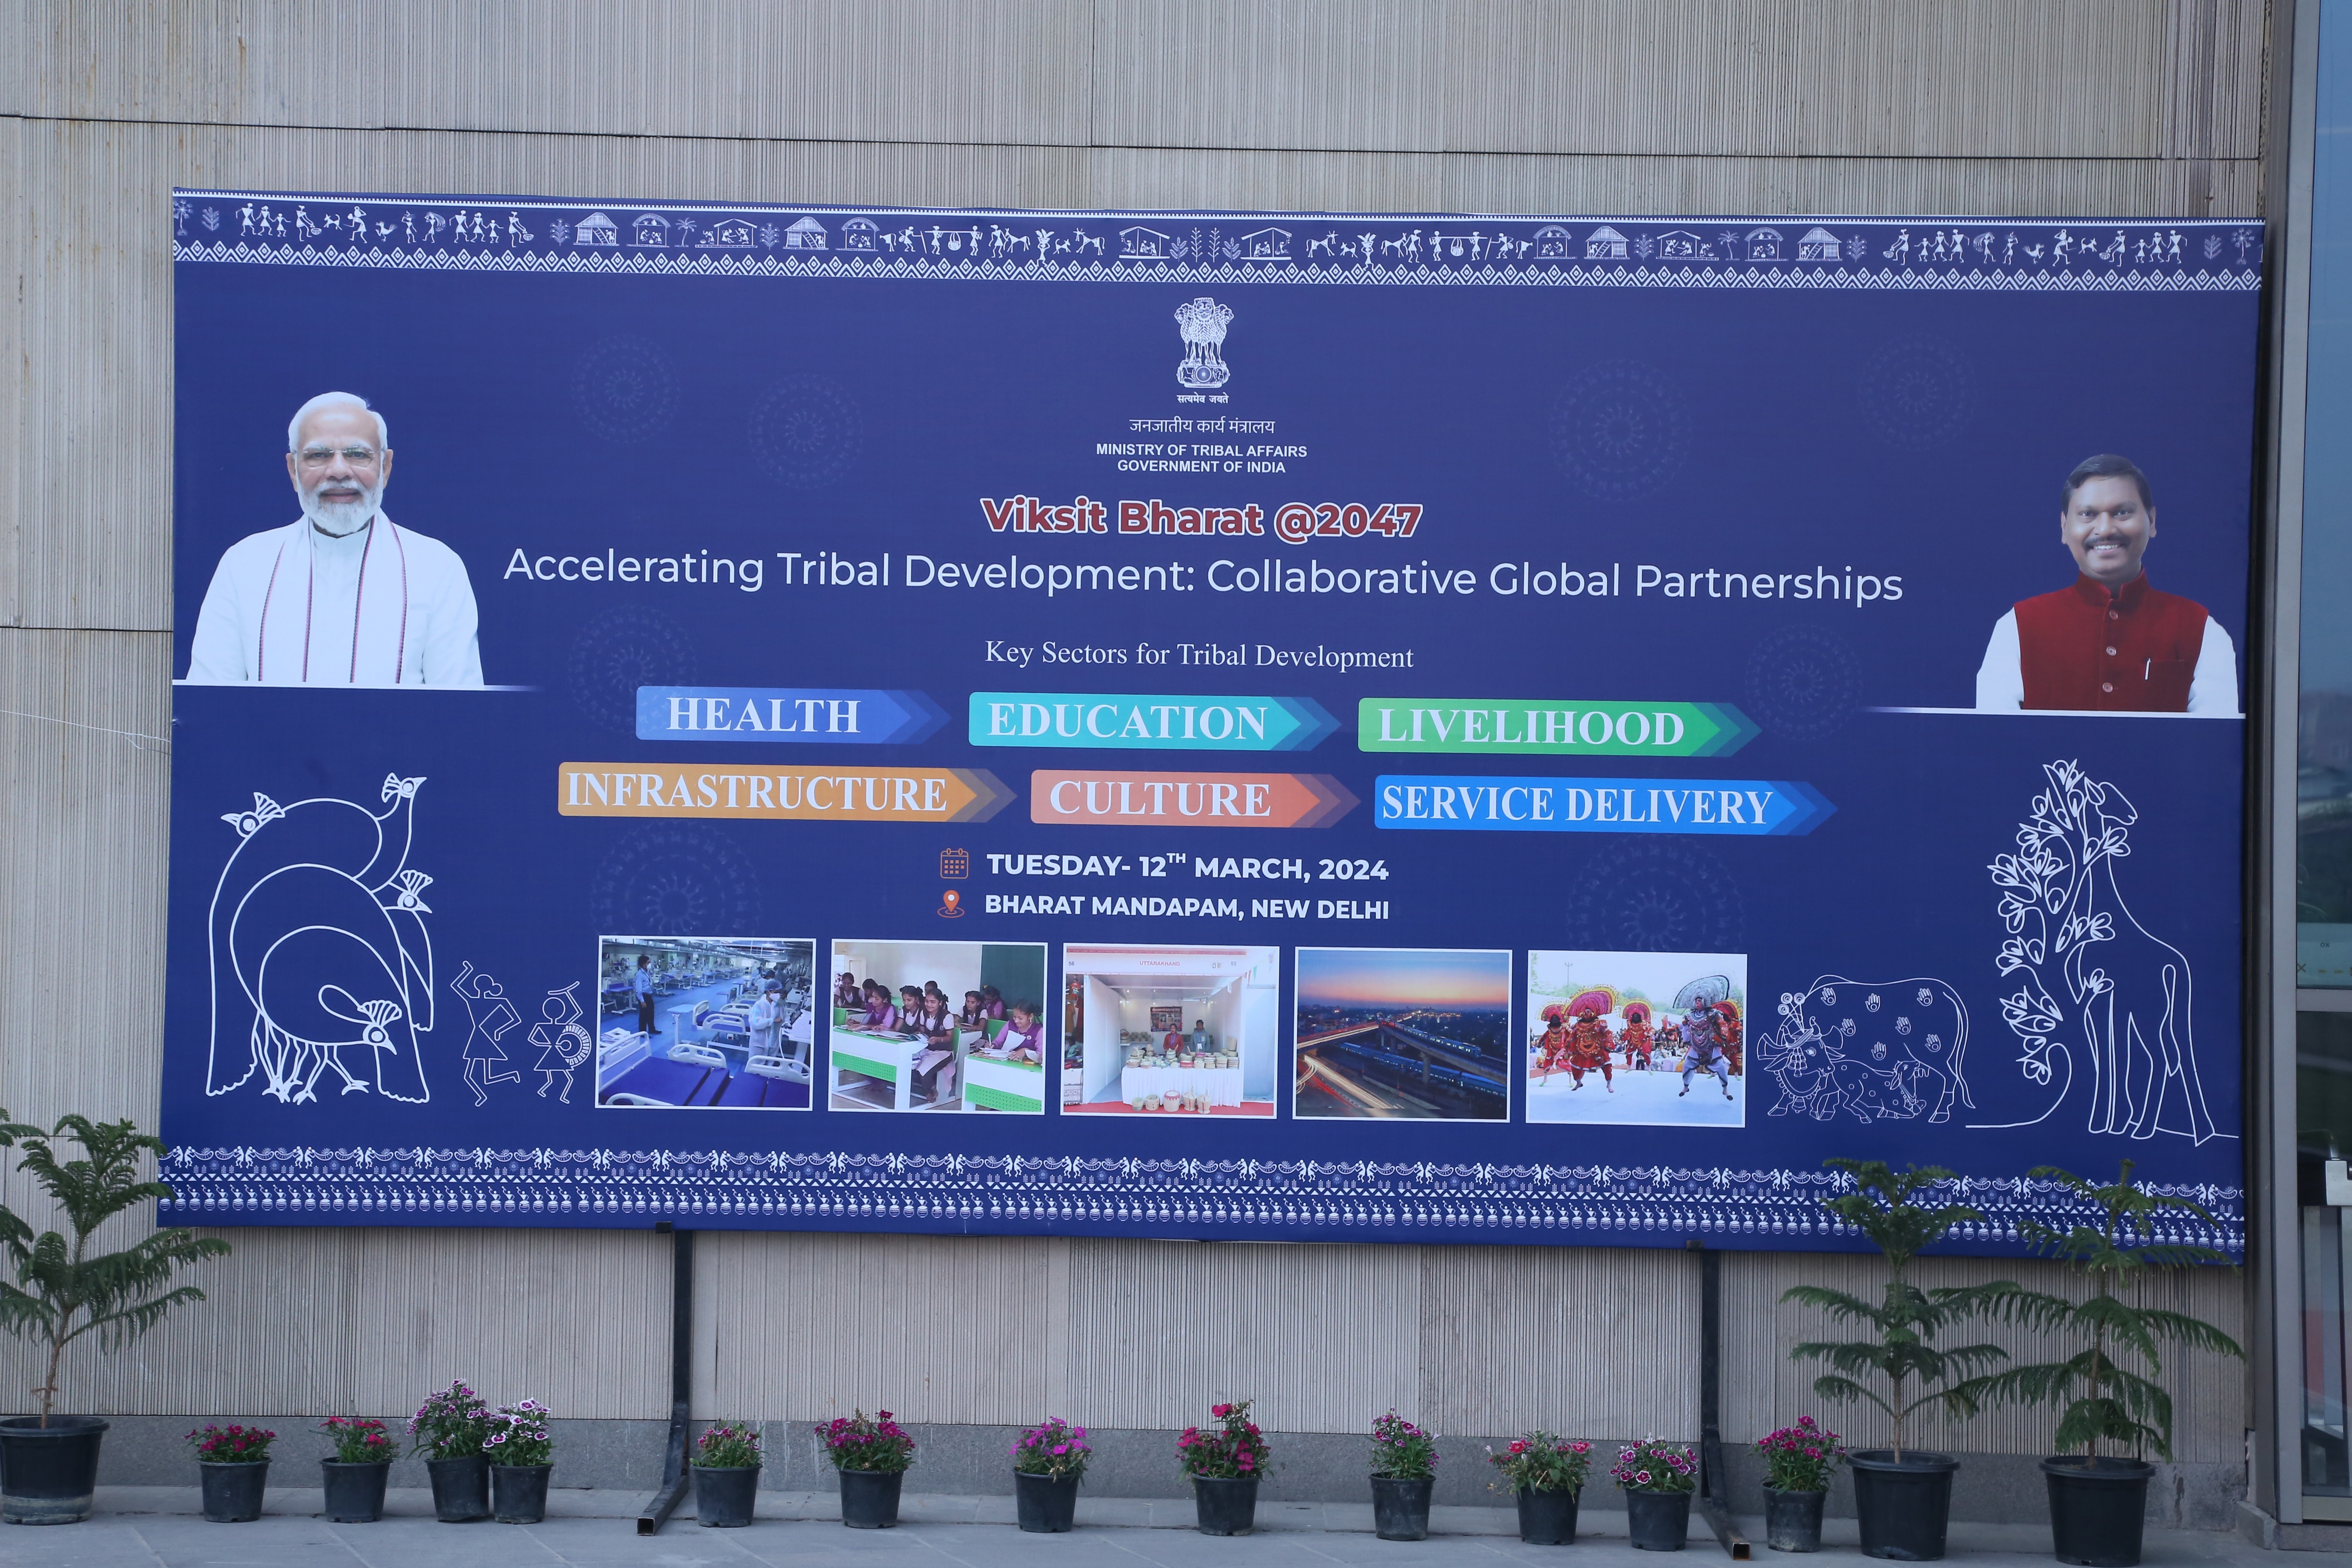 Viksit Bharat 2047 - Accelerating Tribal Development: Collaborative Global Partnerships